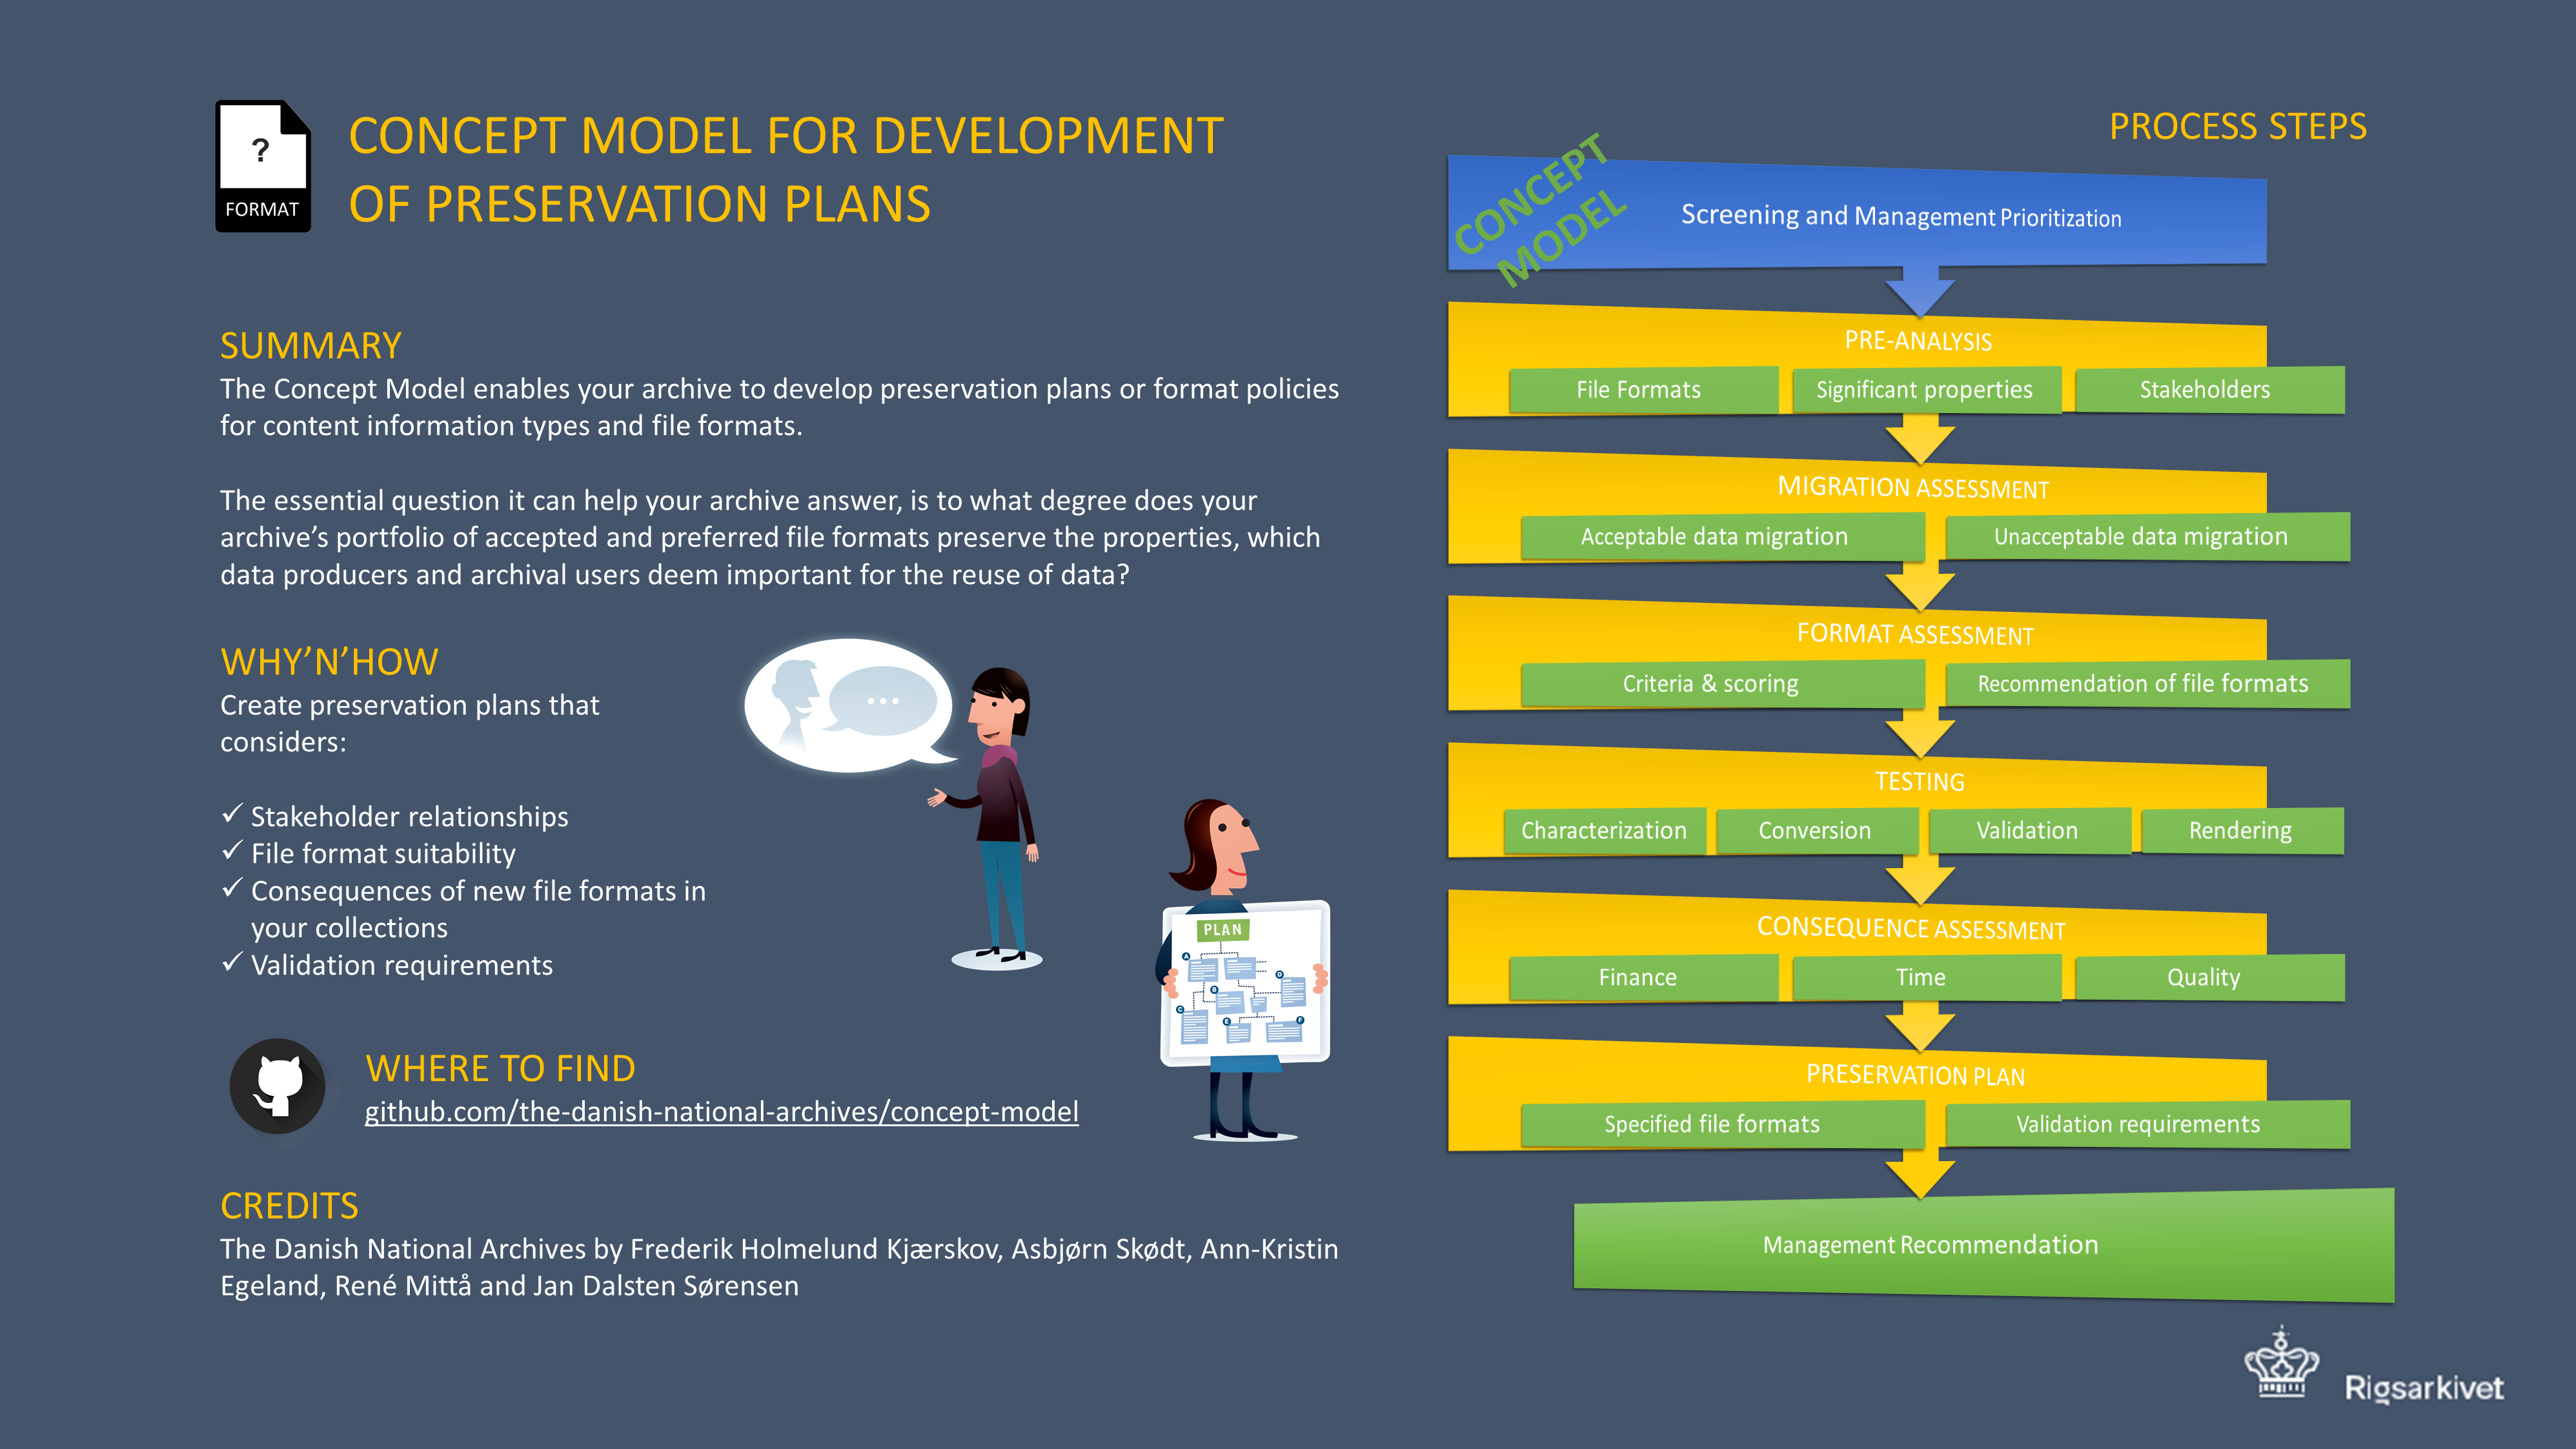 Poster summarizing the Concept Model